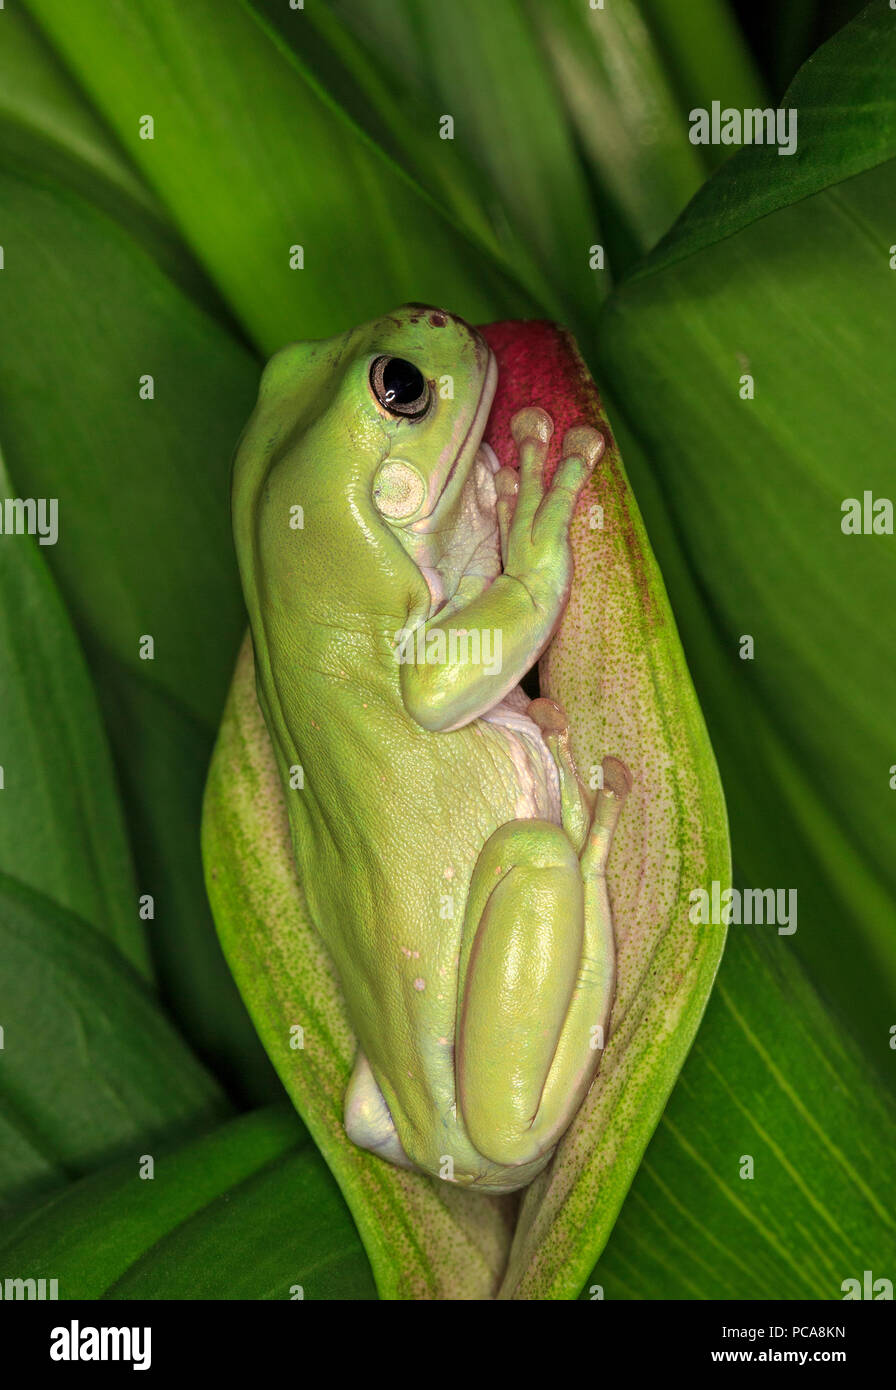 Australian dumpy tree frog or White's tree frog (Litoria caerulea) Stock Photo